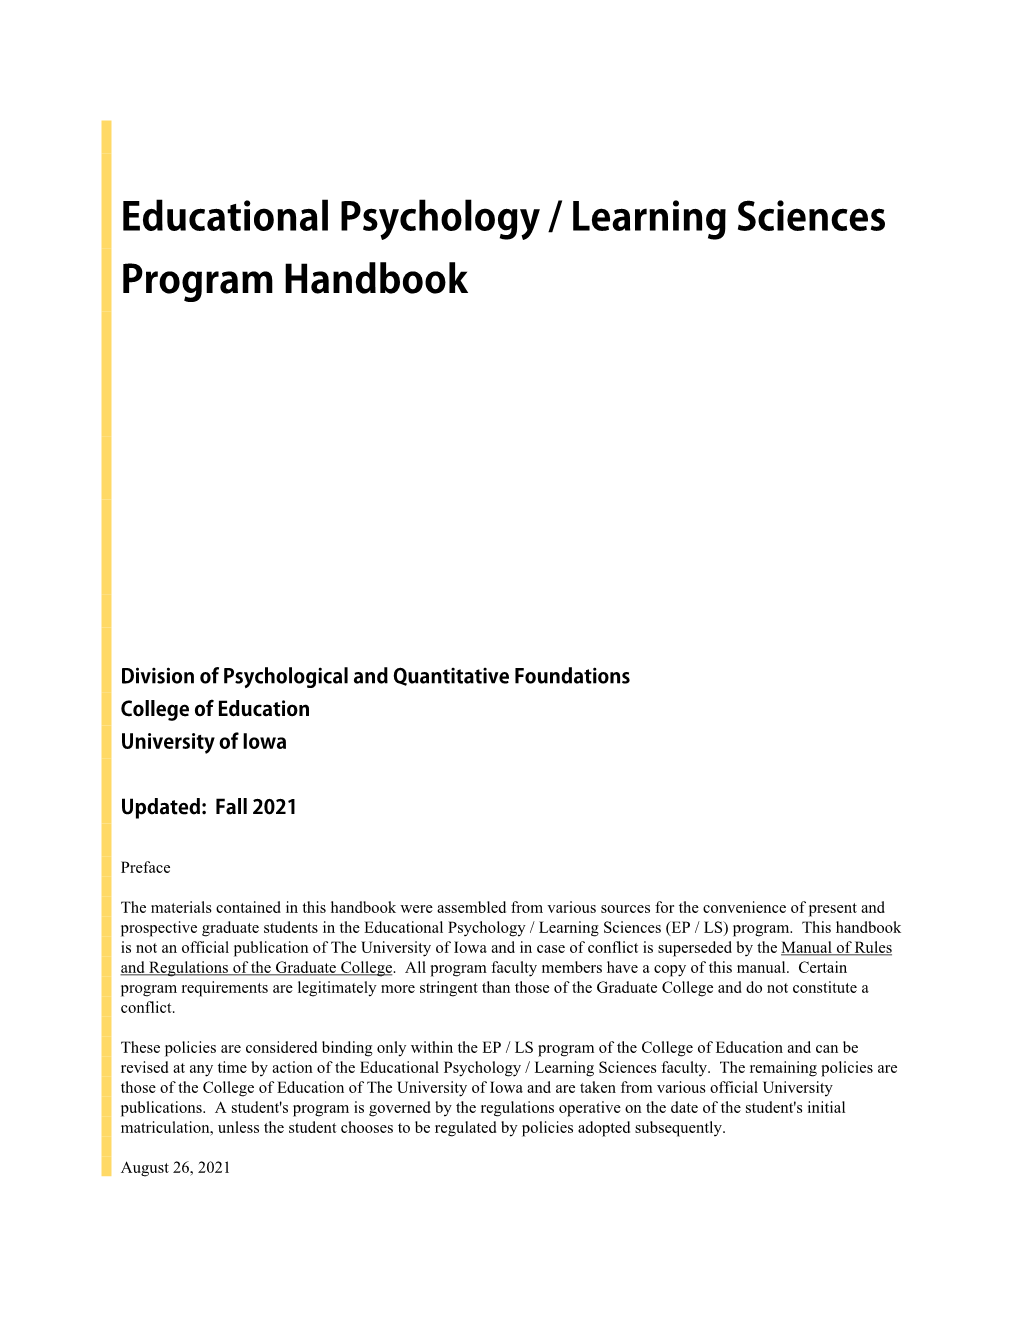 Educational Psychology / Learning Sciences Program Handbook